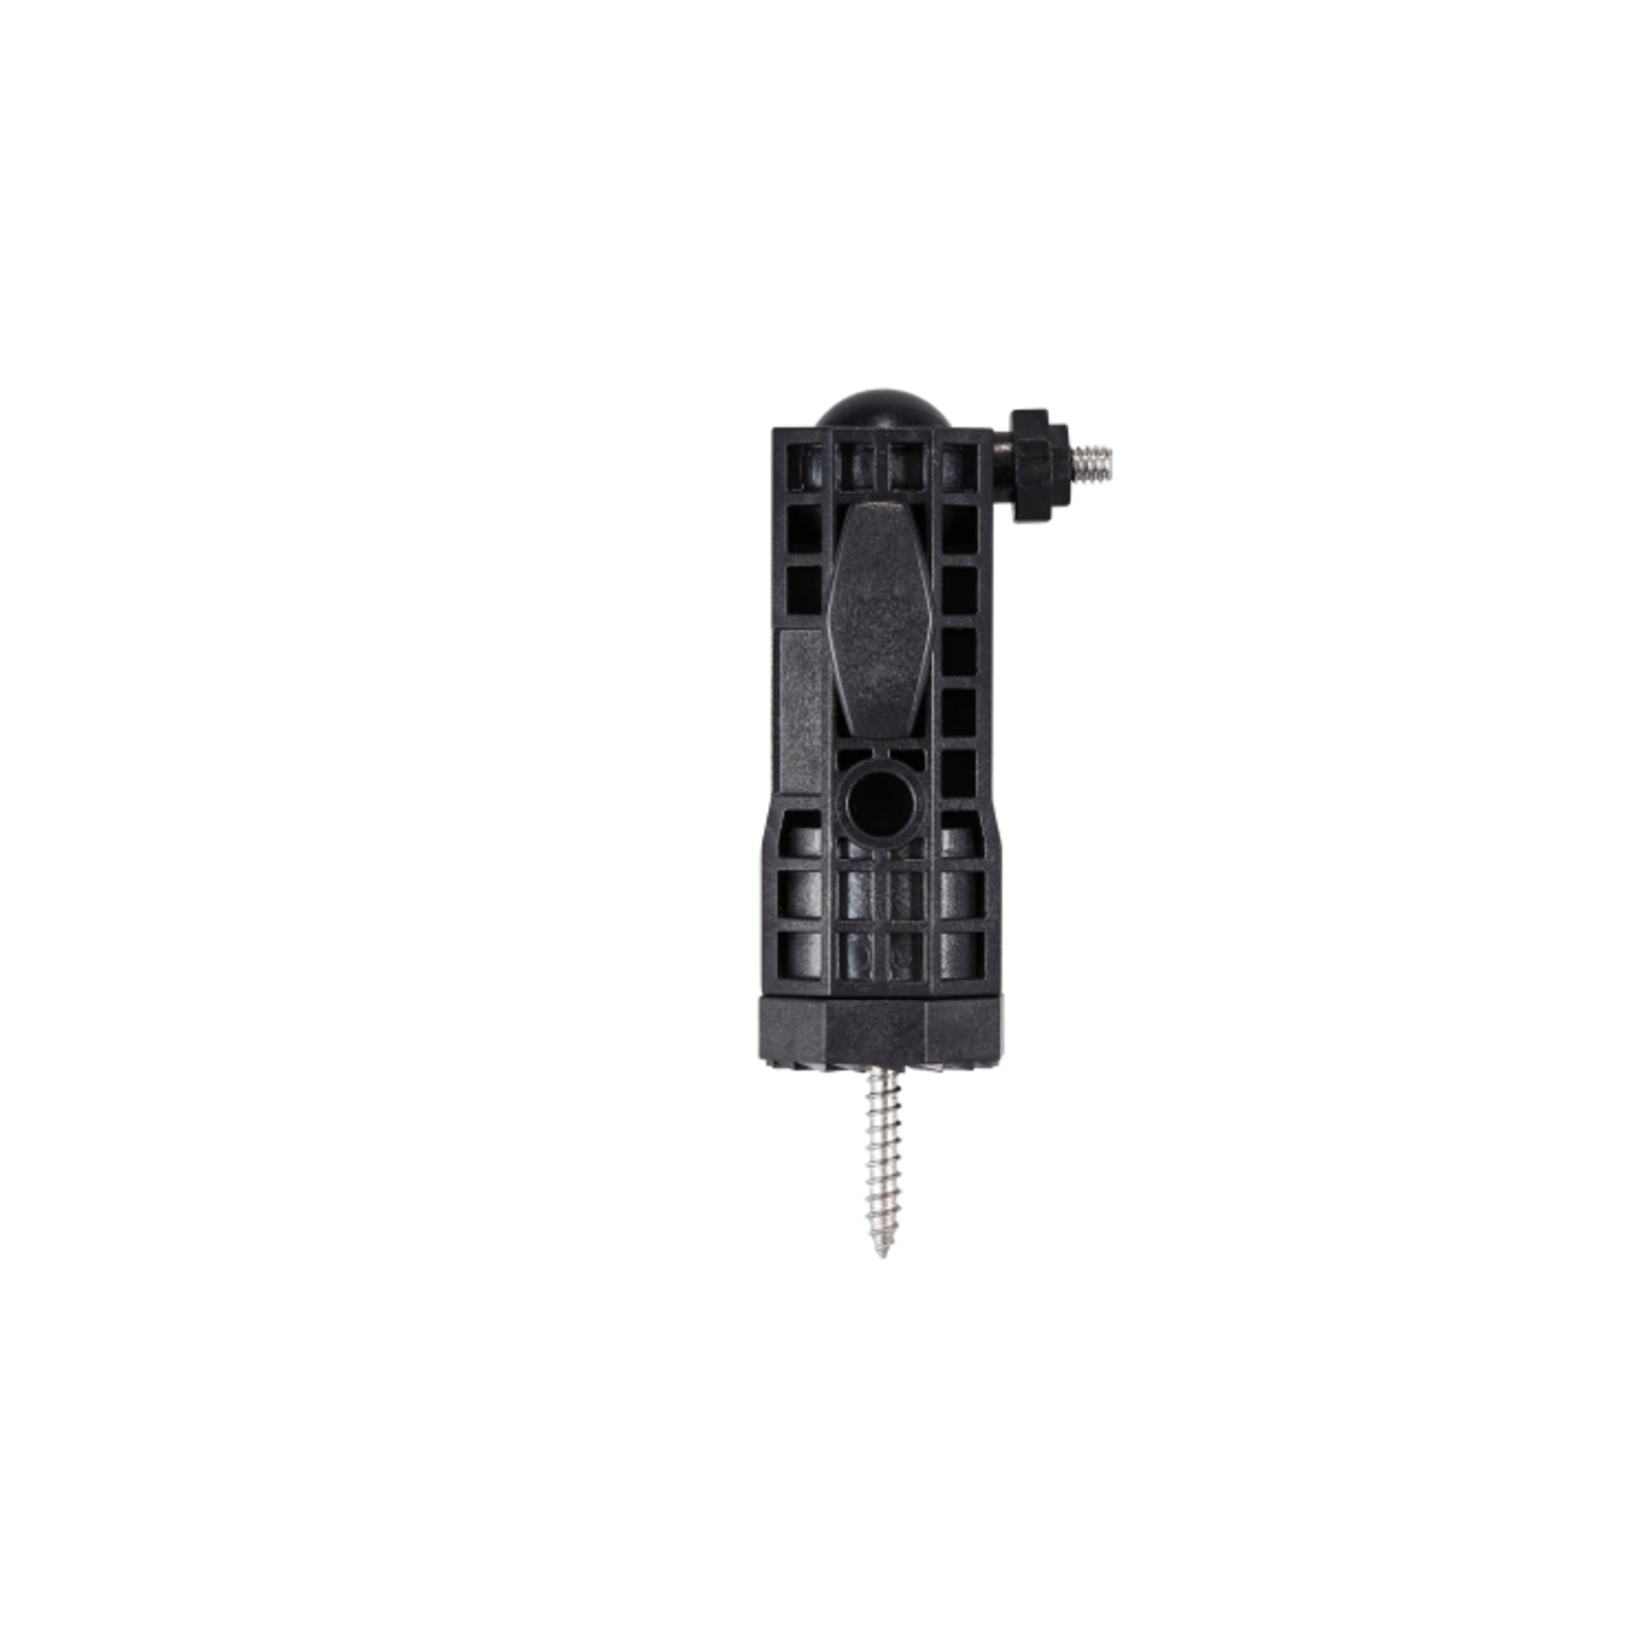 Spypoint SpyPoint adjustable Mounting arm kit Black